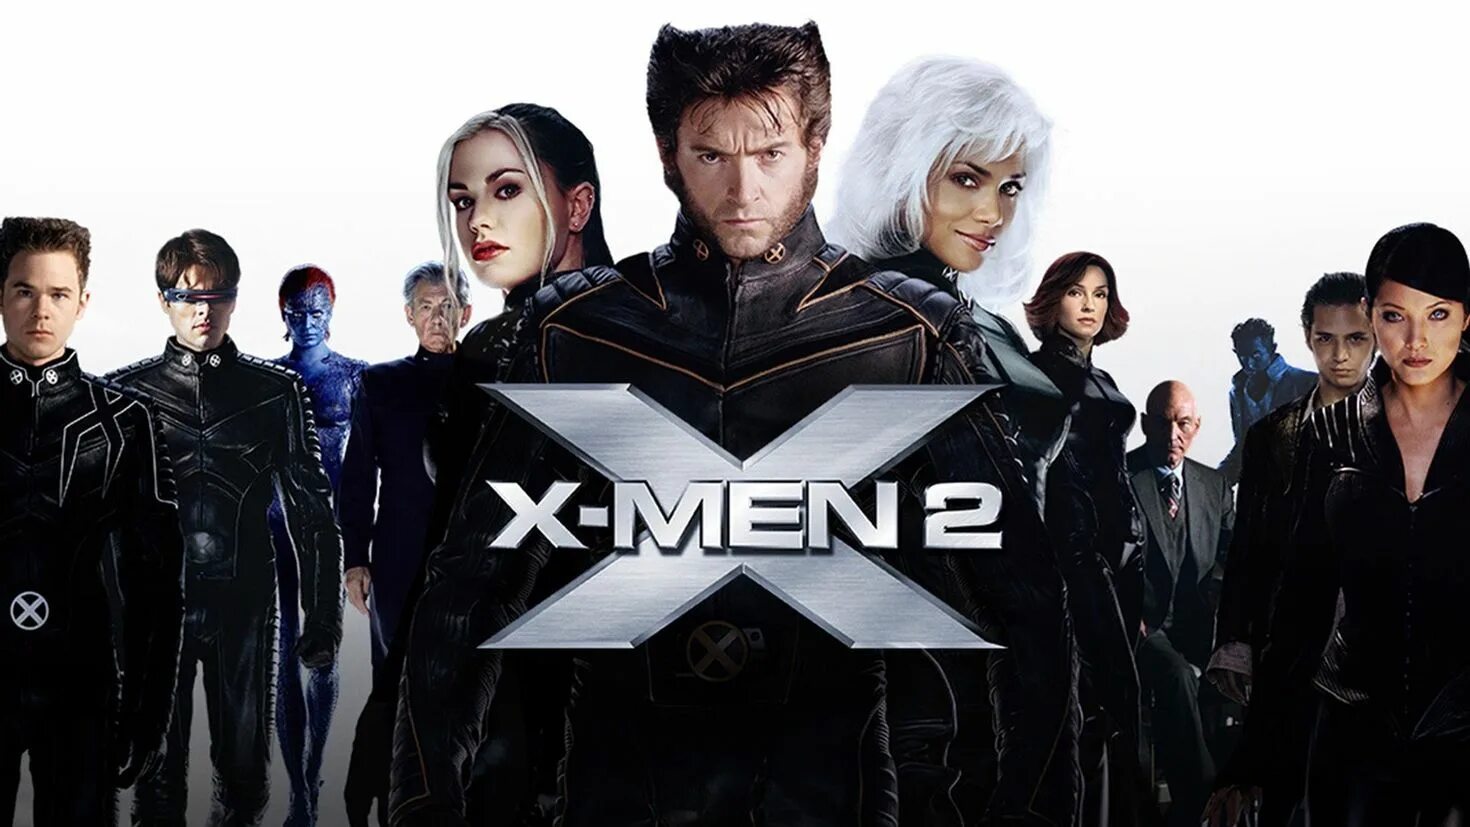 X-men 2 2003. Люди Икс 2 2003 обложка. X-men 2000. X men 2 Marvel. Длс икс